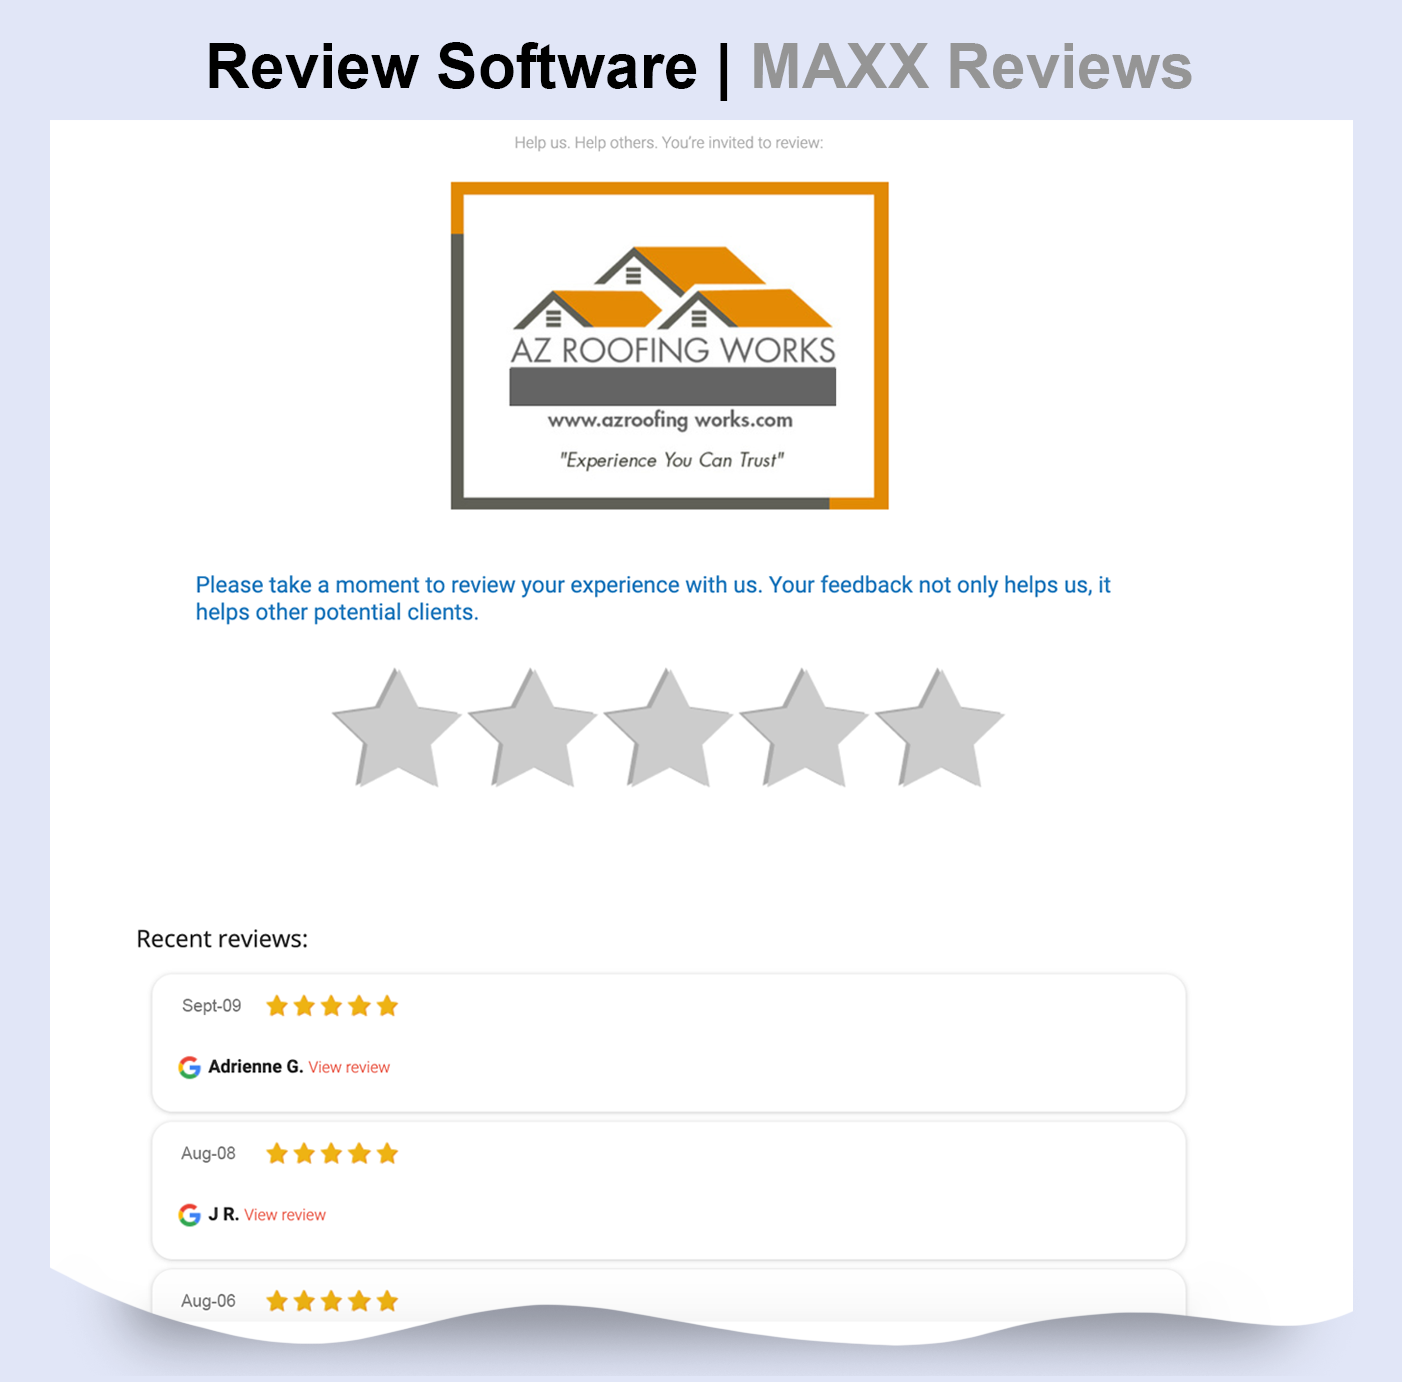 Maxxreview software